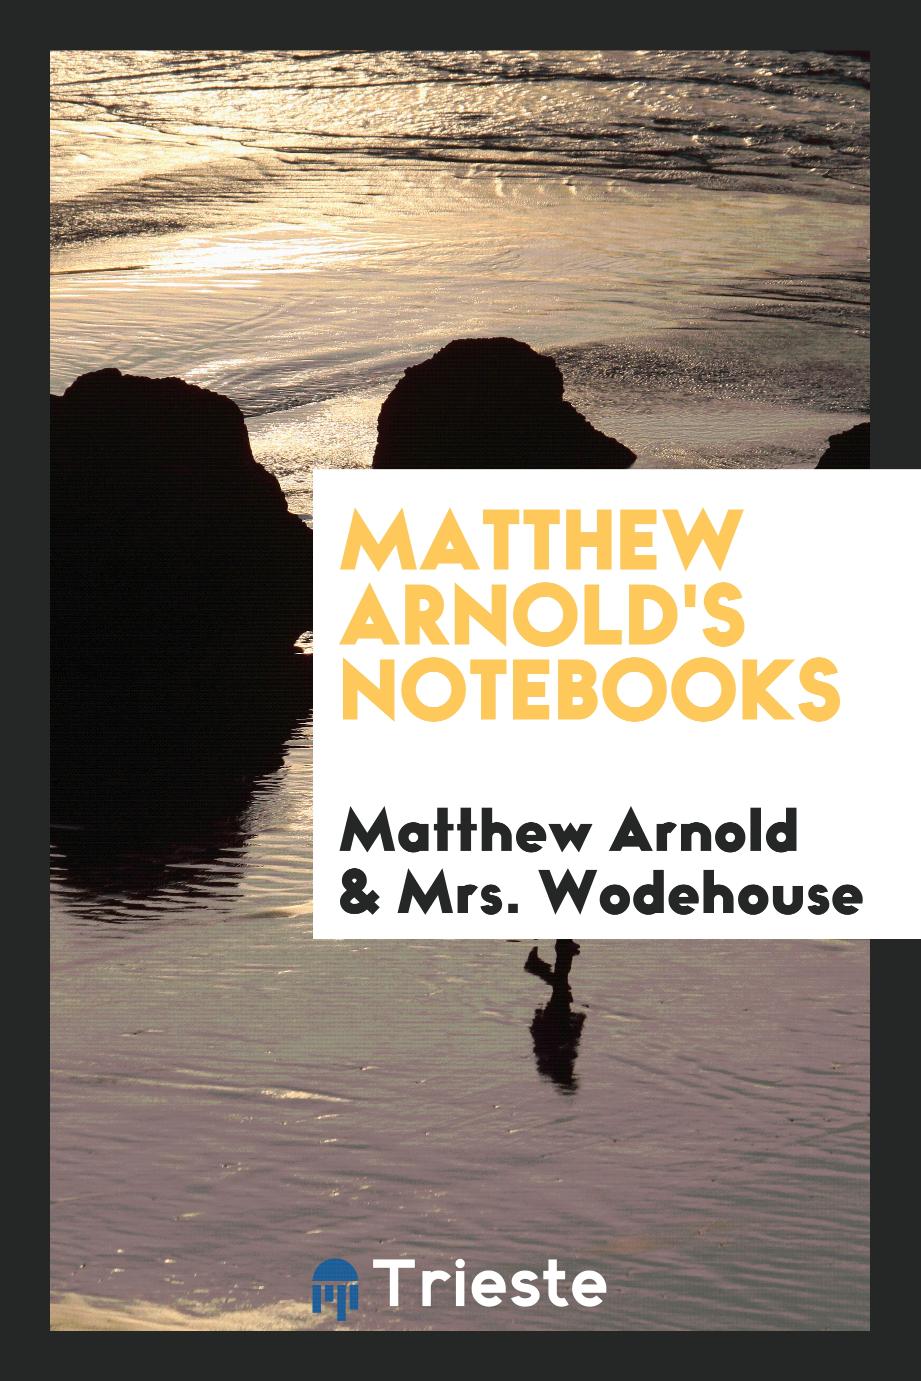 Matthew Arnold's Notebooks